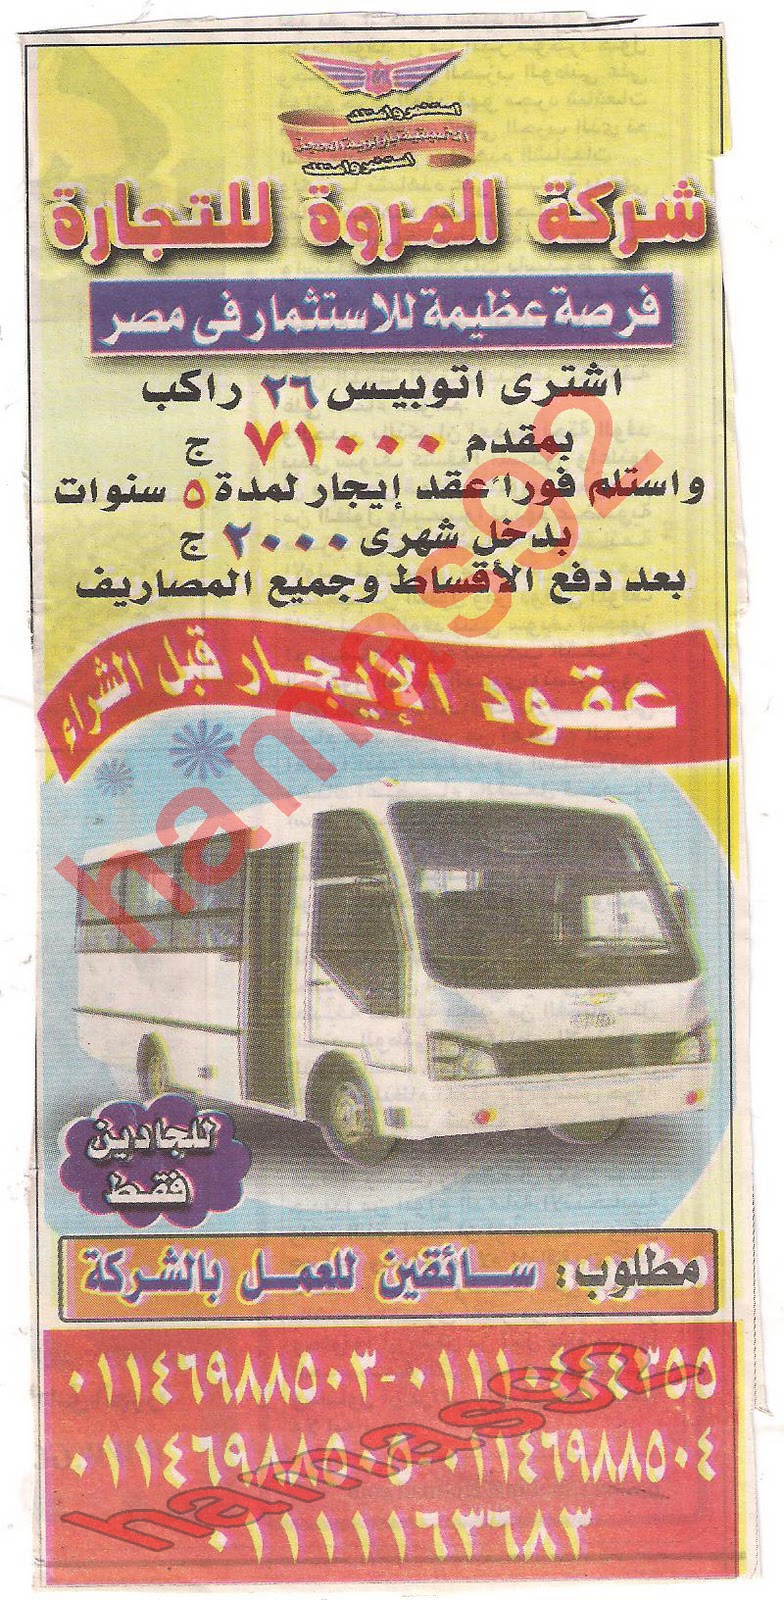 مطلوب سائقين وظائف فى مصر السبت 29 اكتوبر 2011 Picture+001